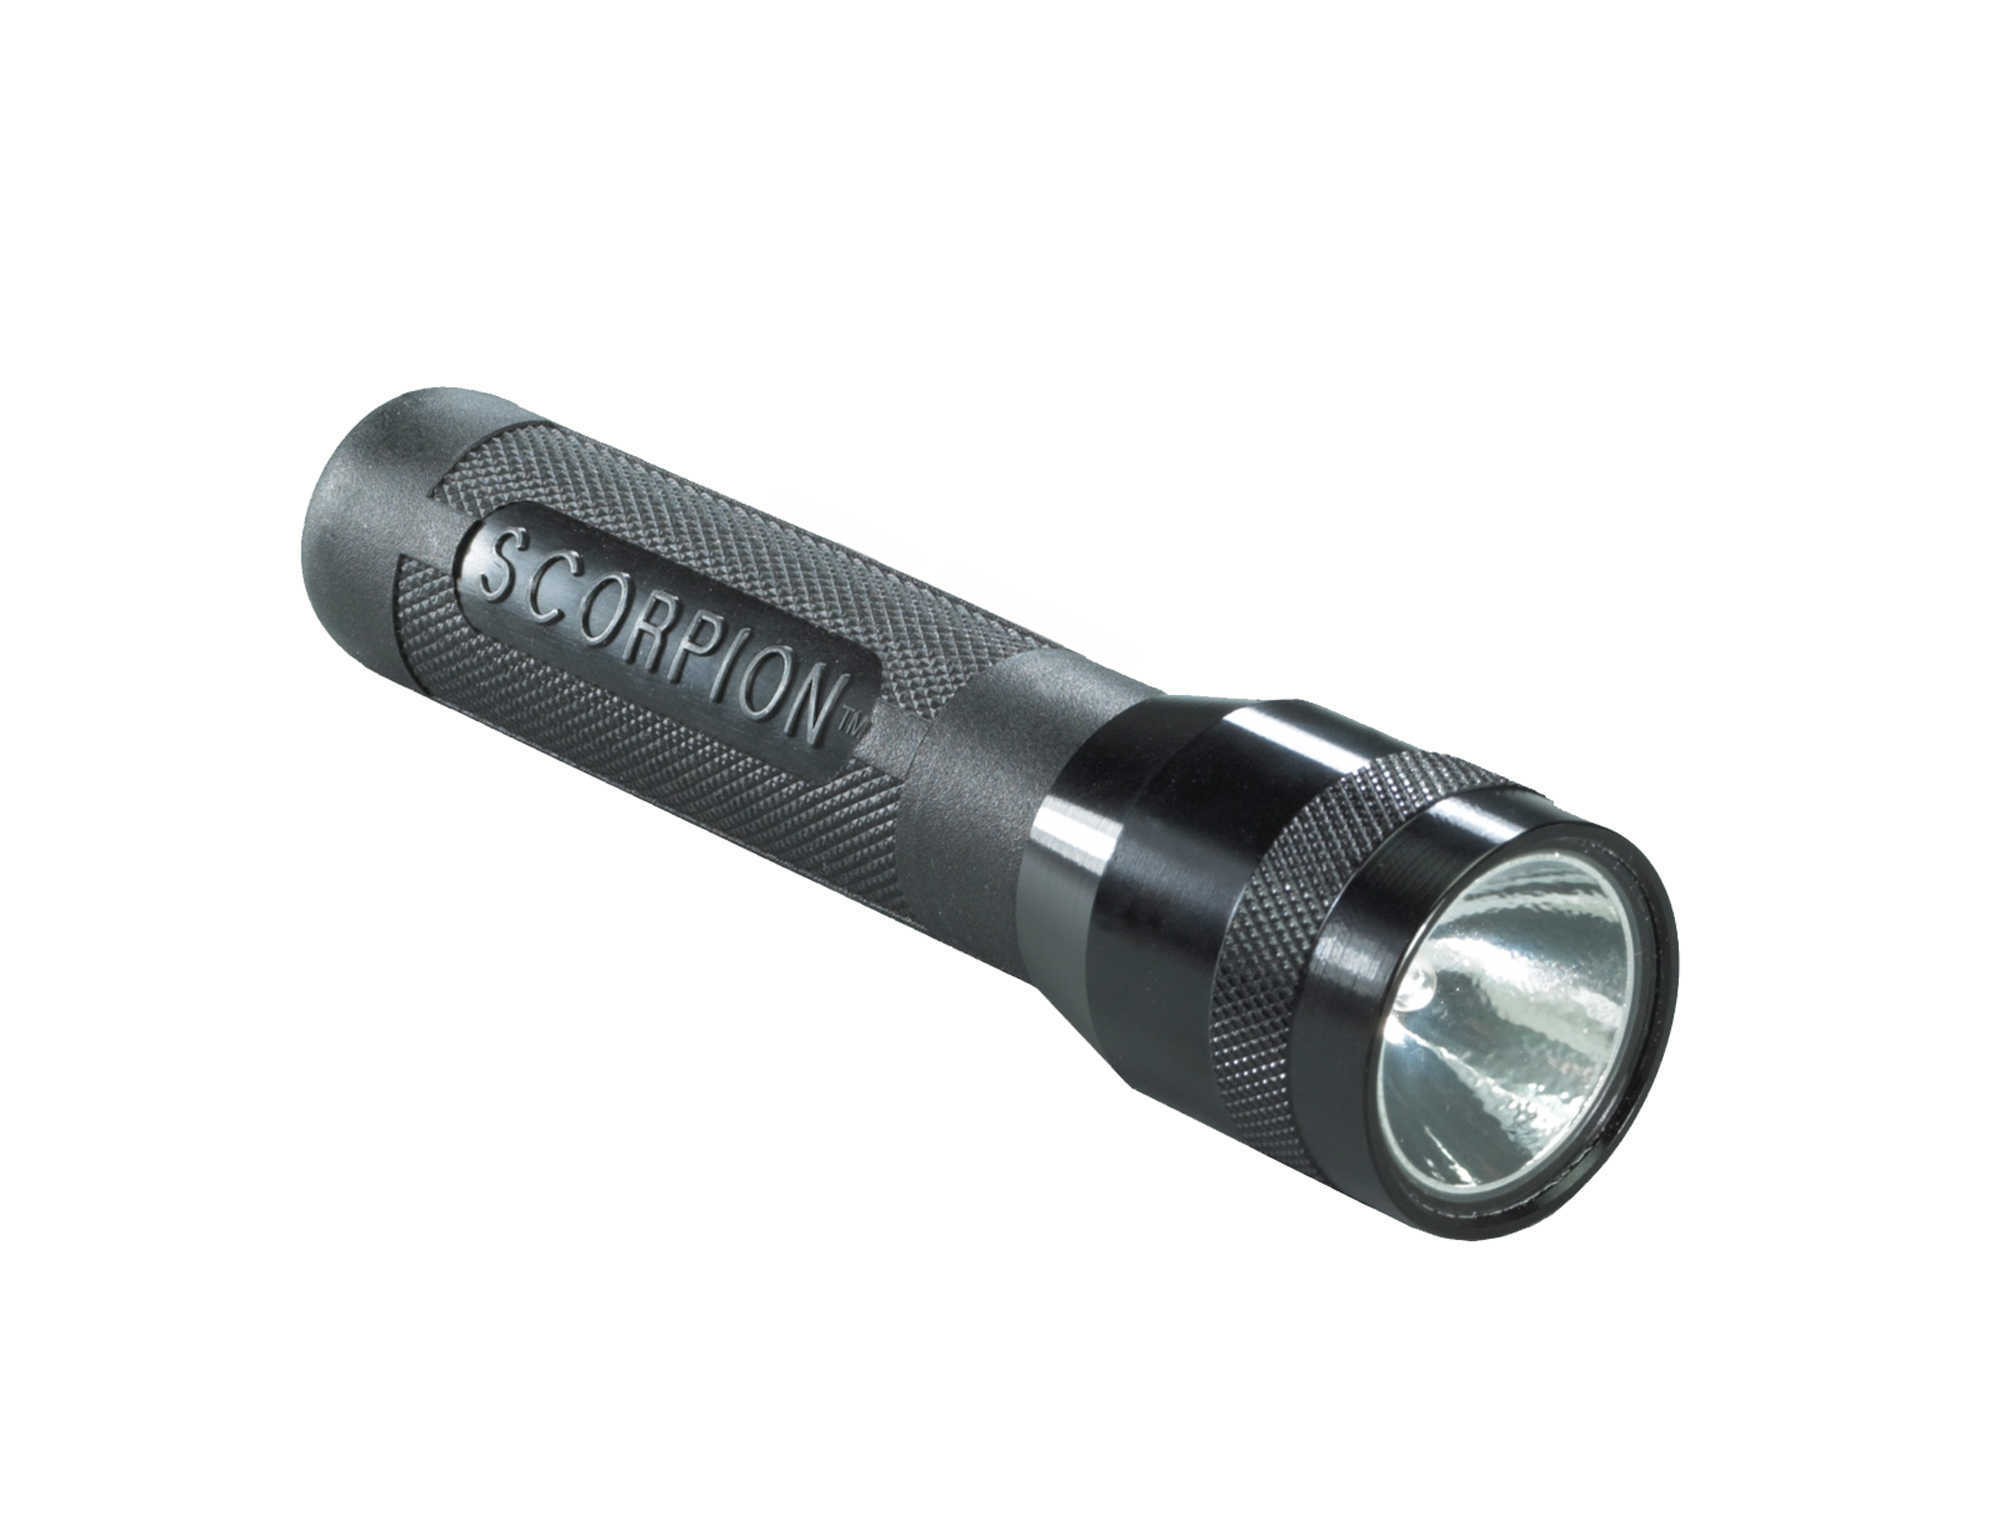 Streamlight Scorpion Flashlight Xenon 78 Lumens W/Battery Black 85001